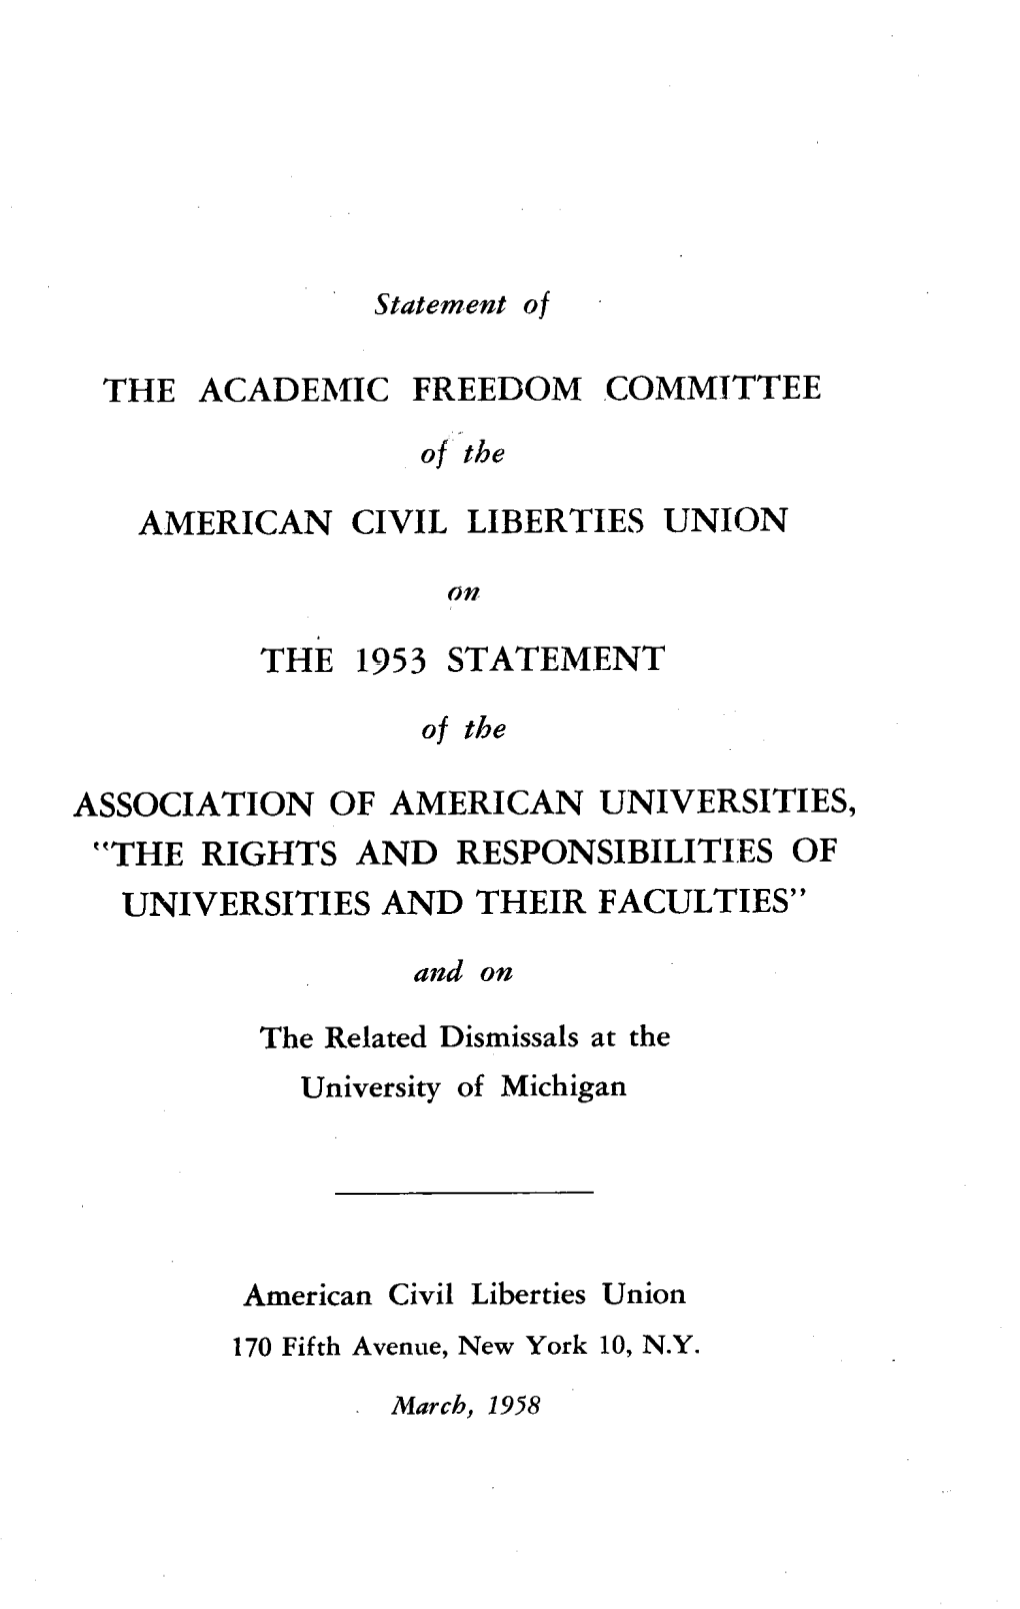 The Academic Freedom Committee American Civil